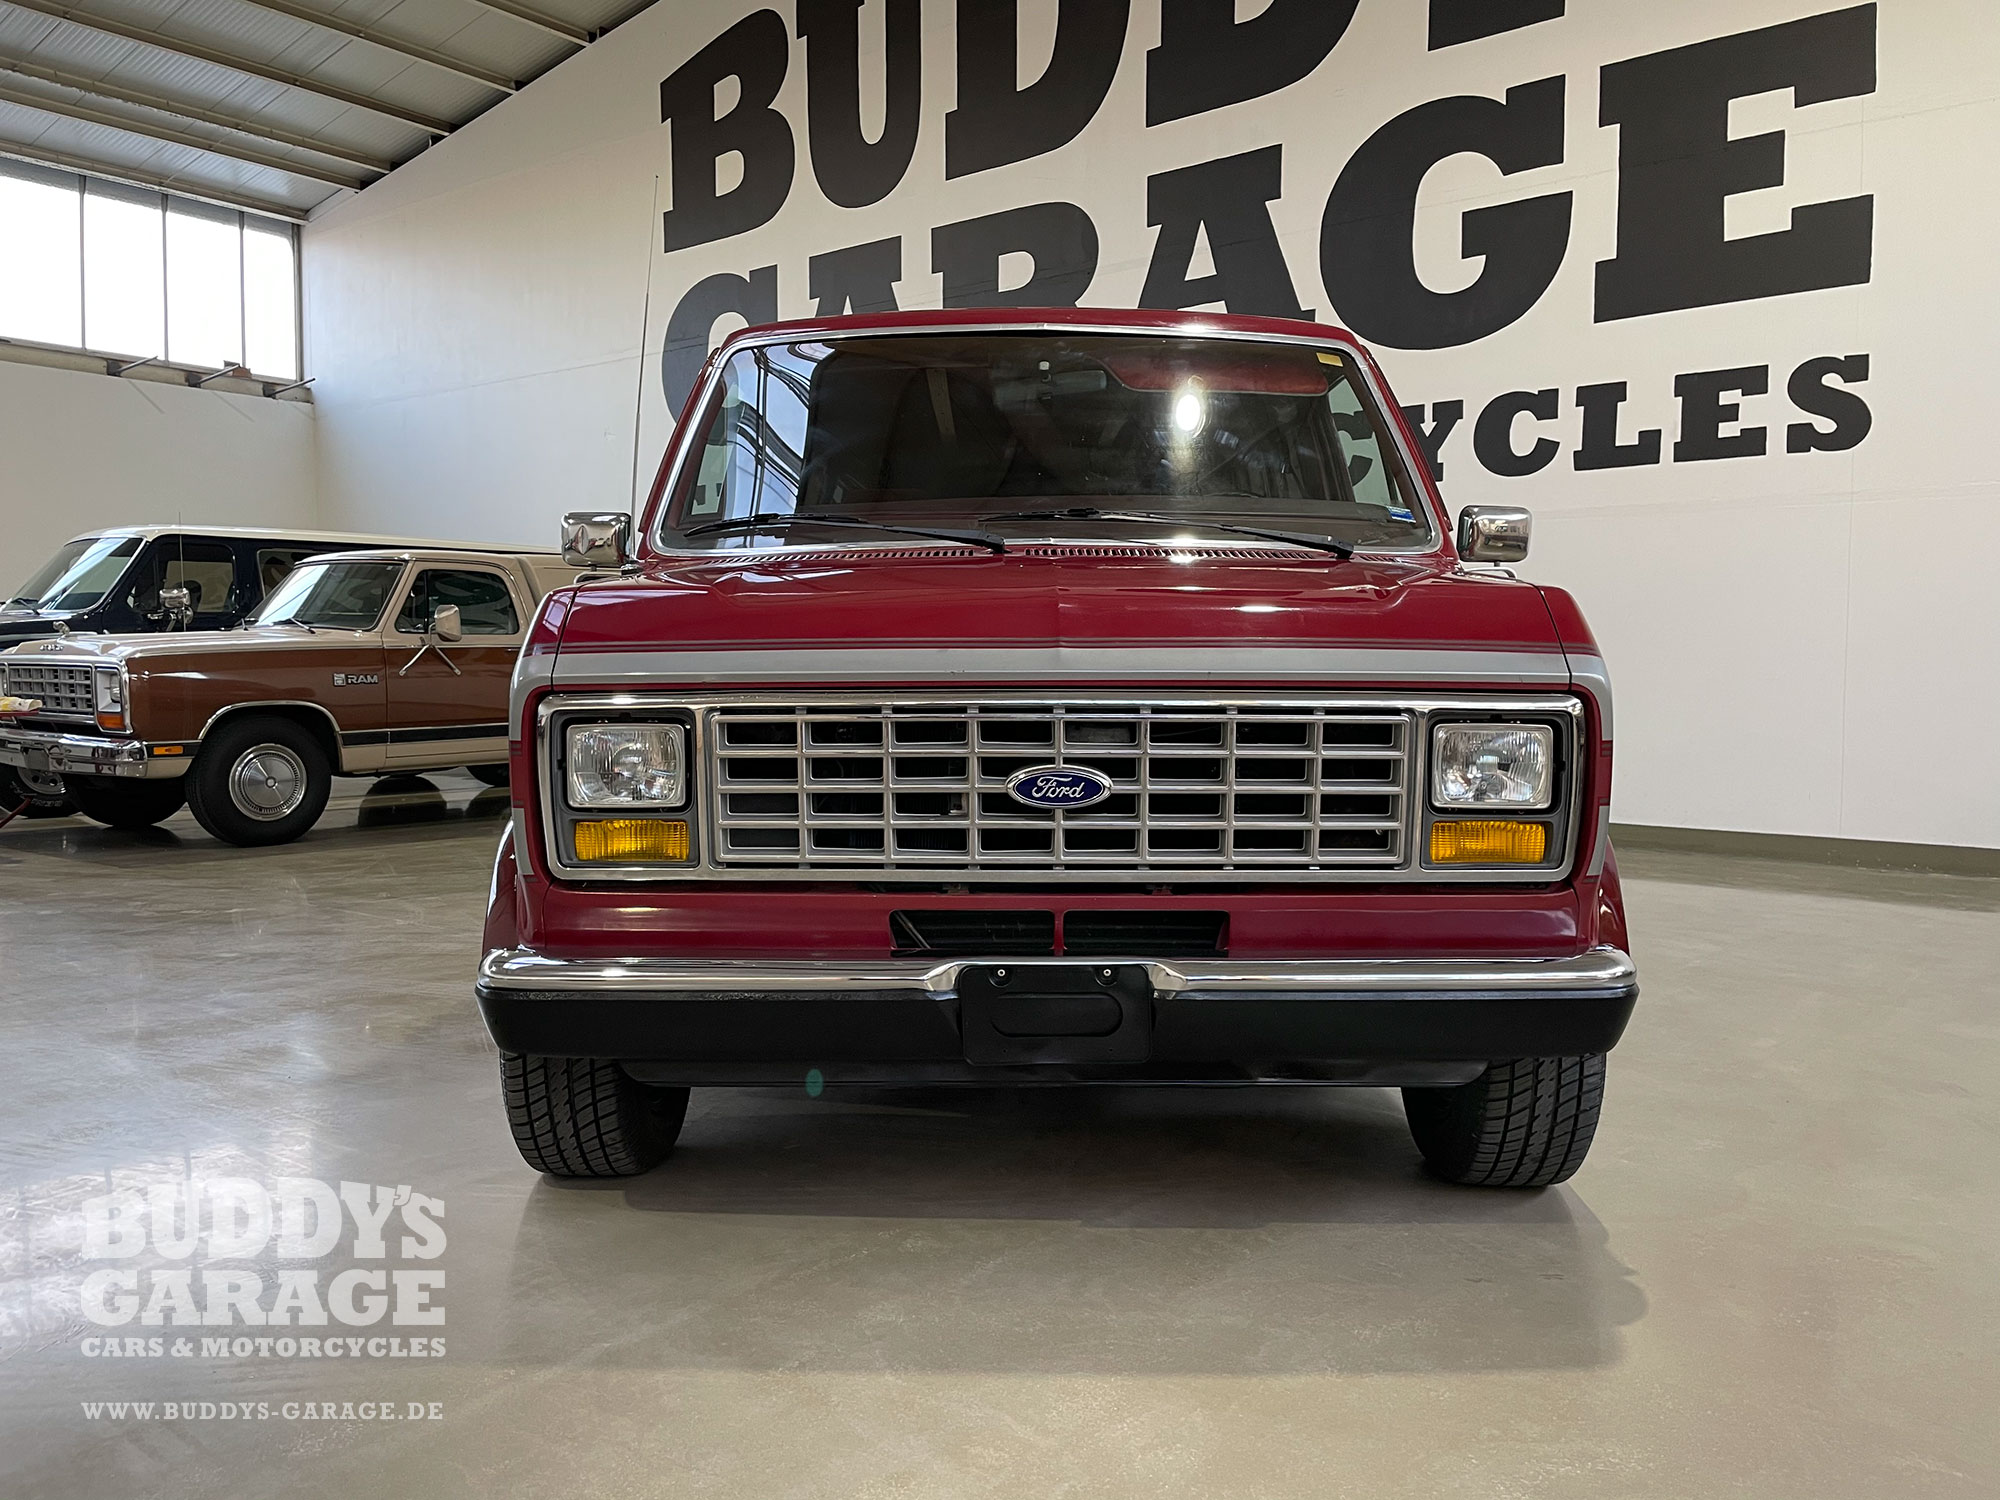 1988er Ford Econoline 150 | Buddy's Garage Bad Oeynhausen